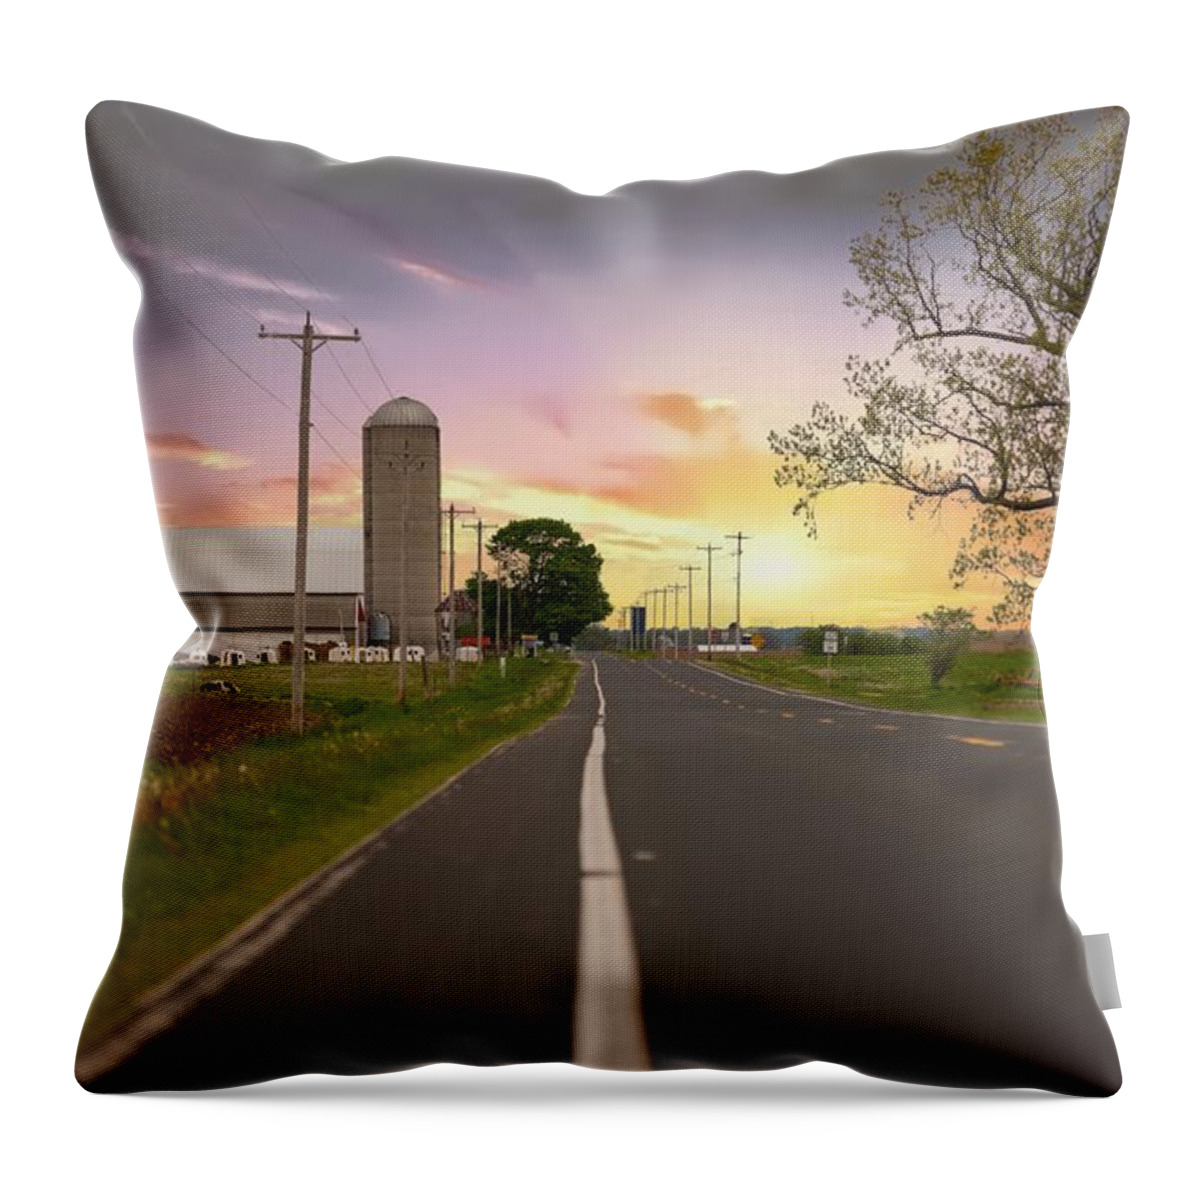 Farm Throw Pillow featuring the photograph Farm Life by James Meyer